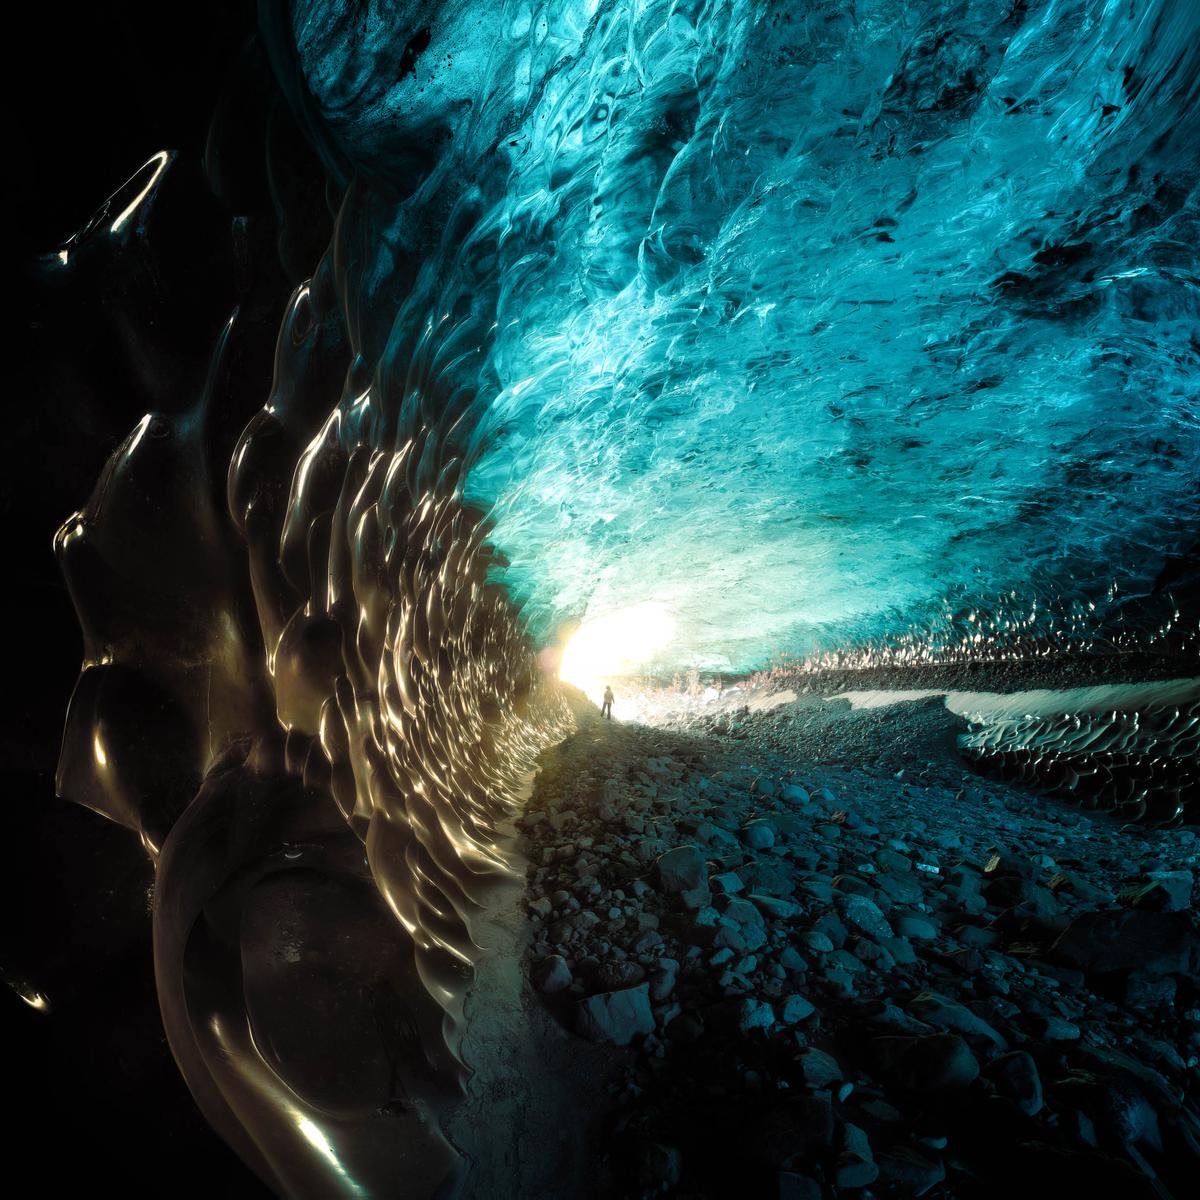 "Tunnel vision". (Courtesy of <a href="https://www.instagram.com/thestrawhatbackpacker/">Ryan Newburn</a>)